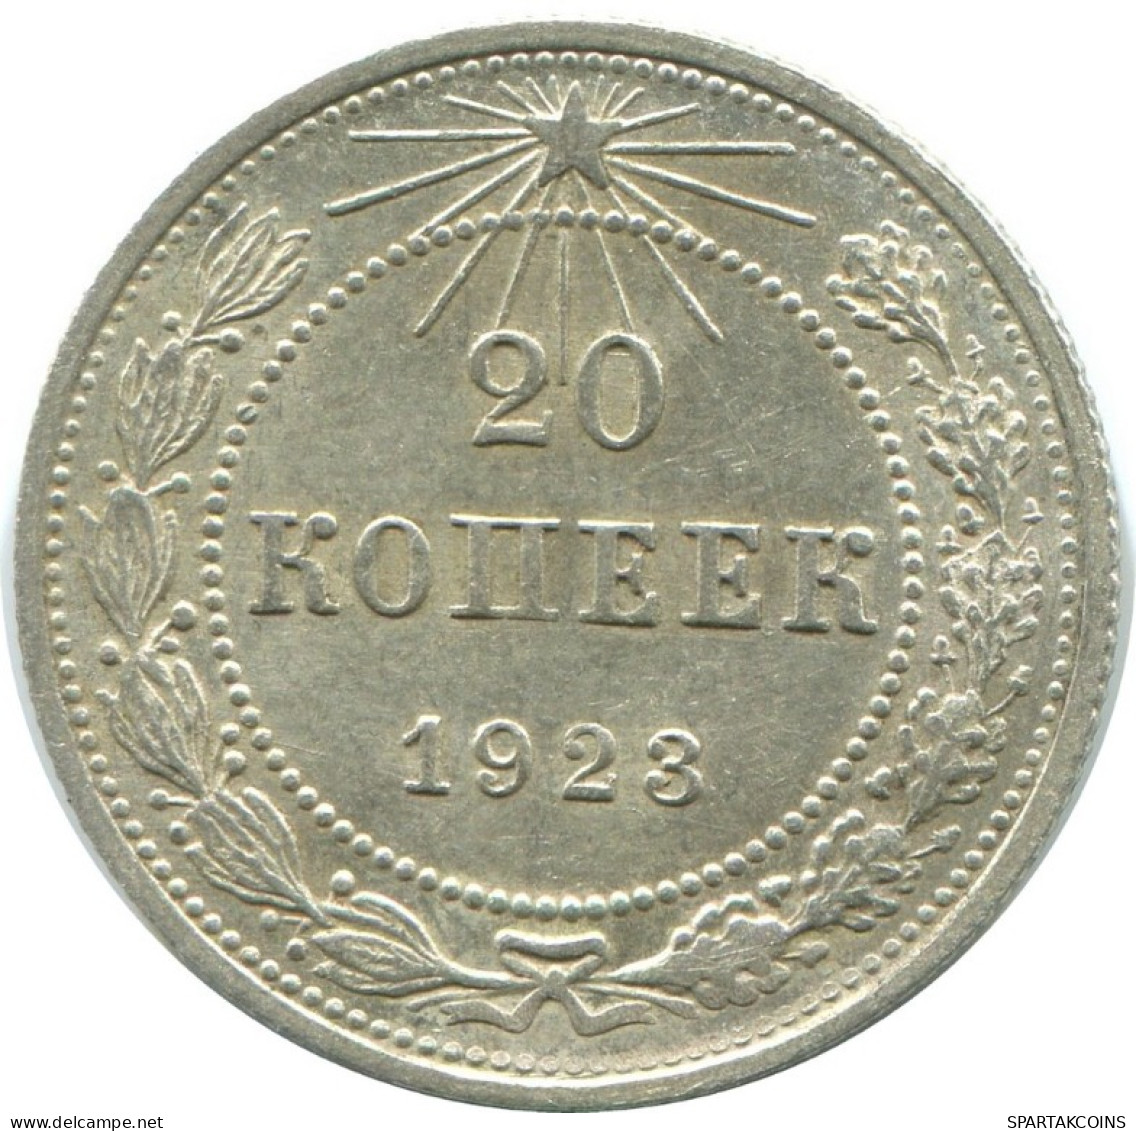 20 KOPEKS 1923 RUSSIA RSFSR SILVER Coin HIGH GRADE #AF612.U.A - Russia